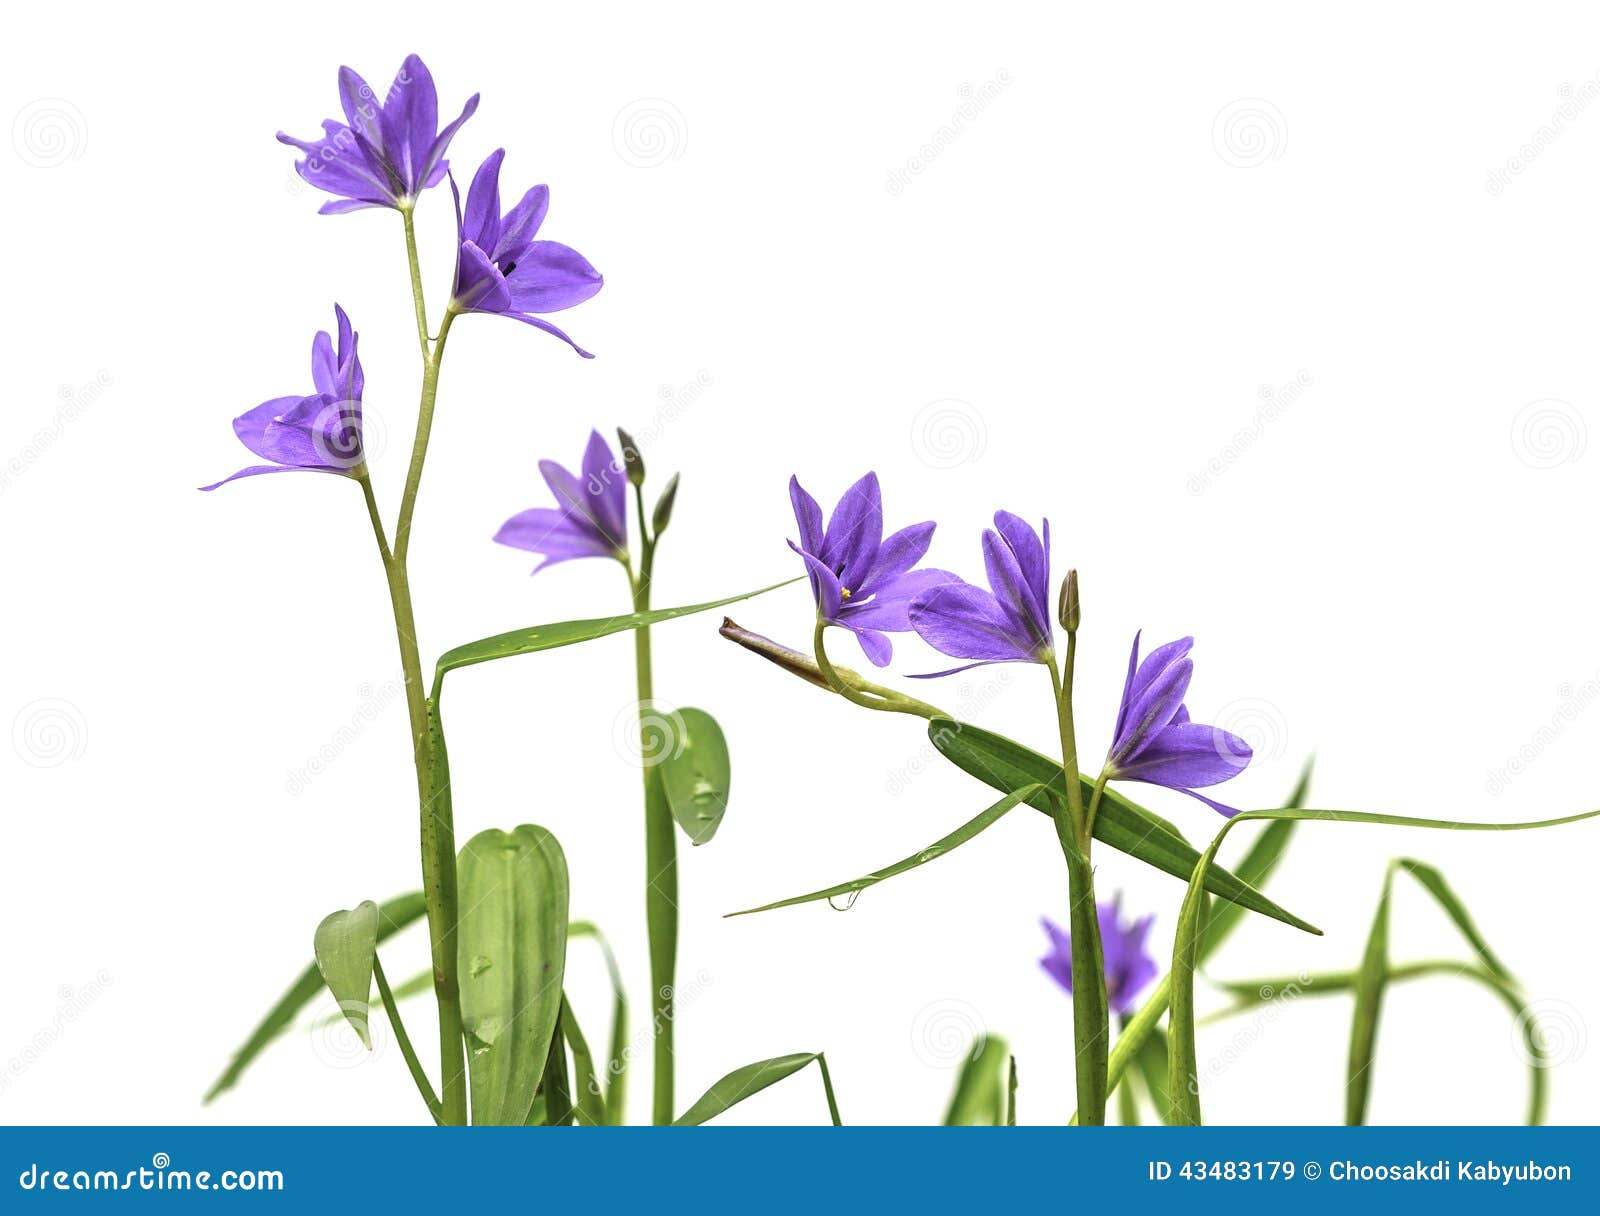 Hydrophytes stock image. Image of plant, flower, nature - 43483179